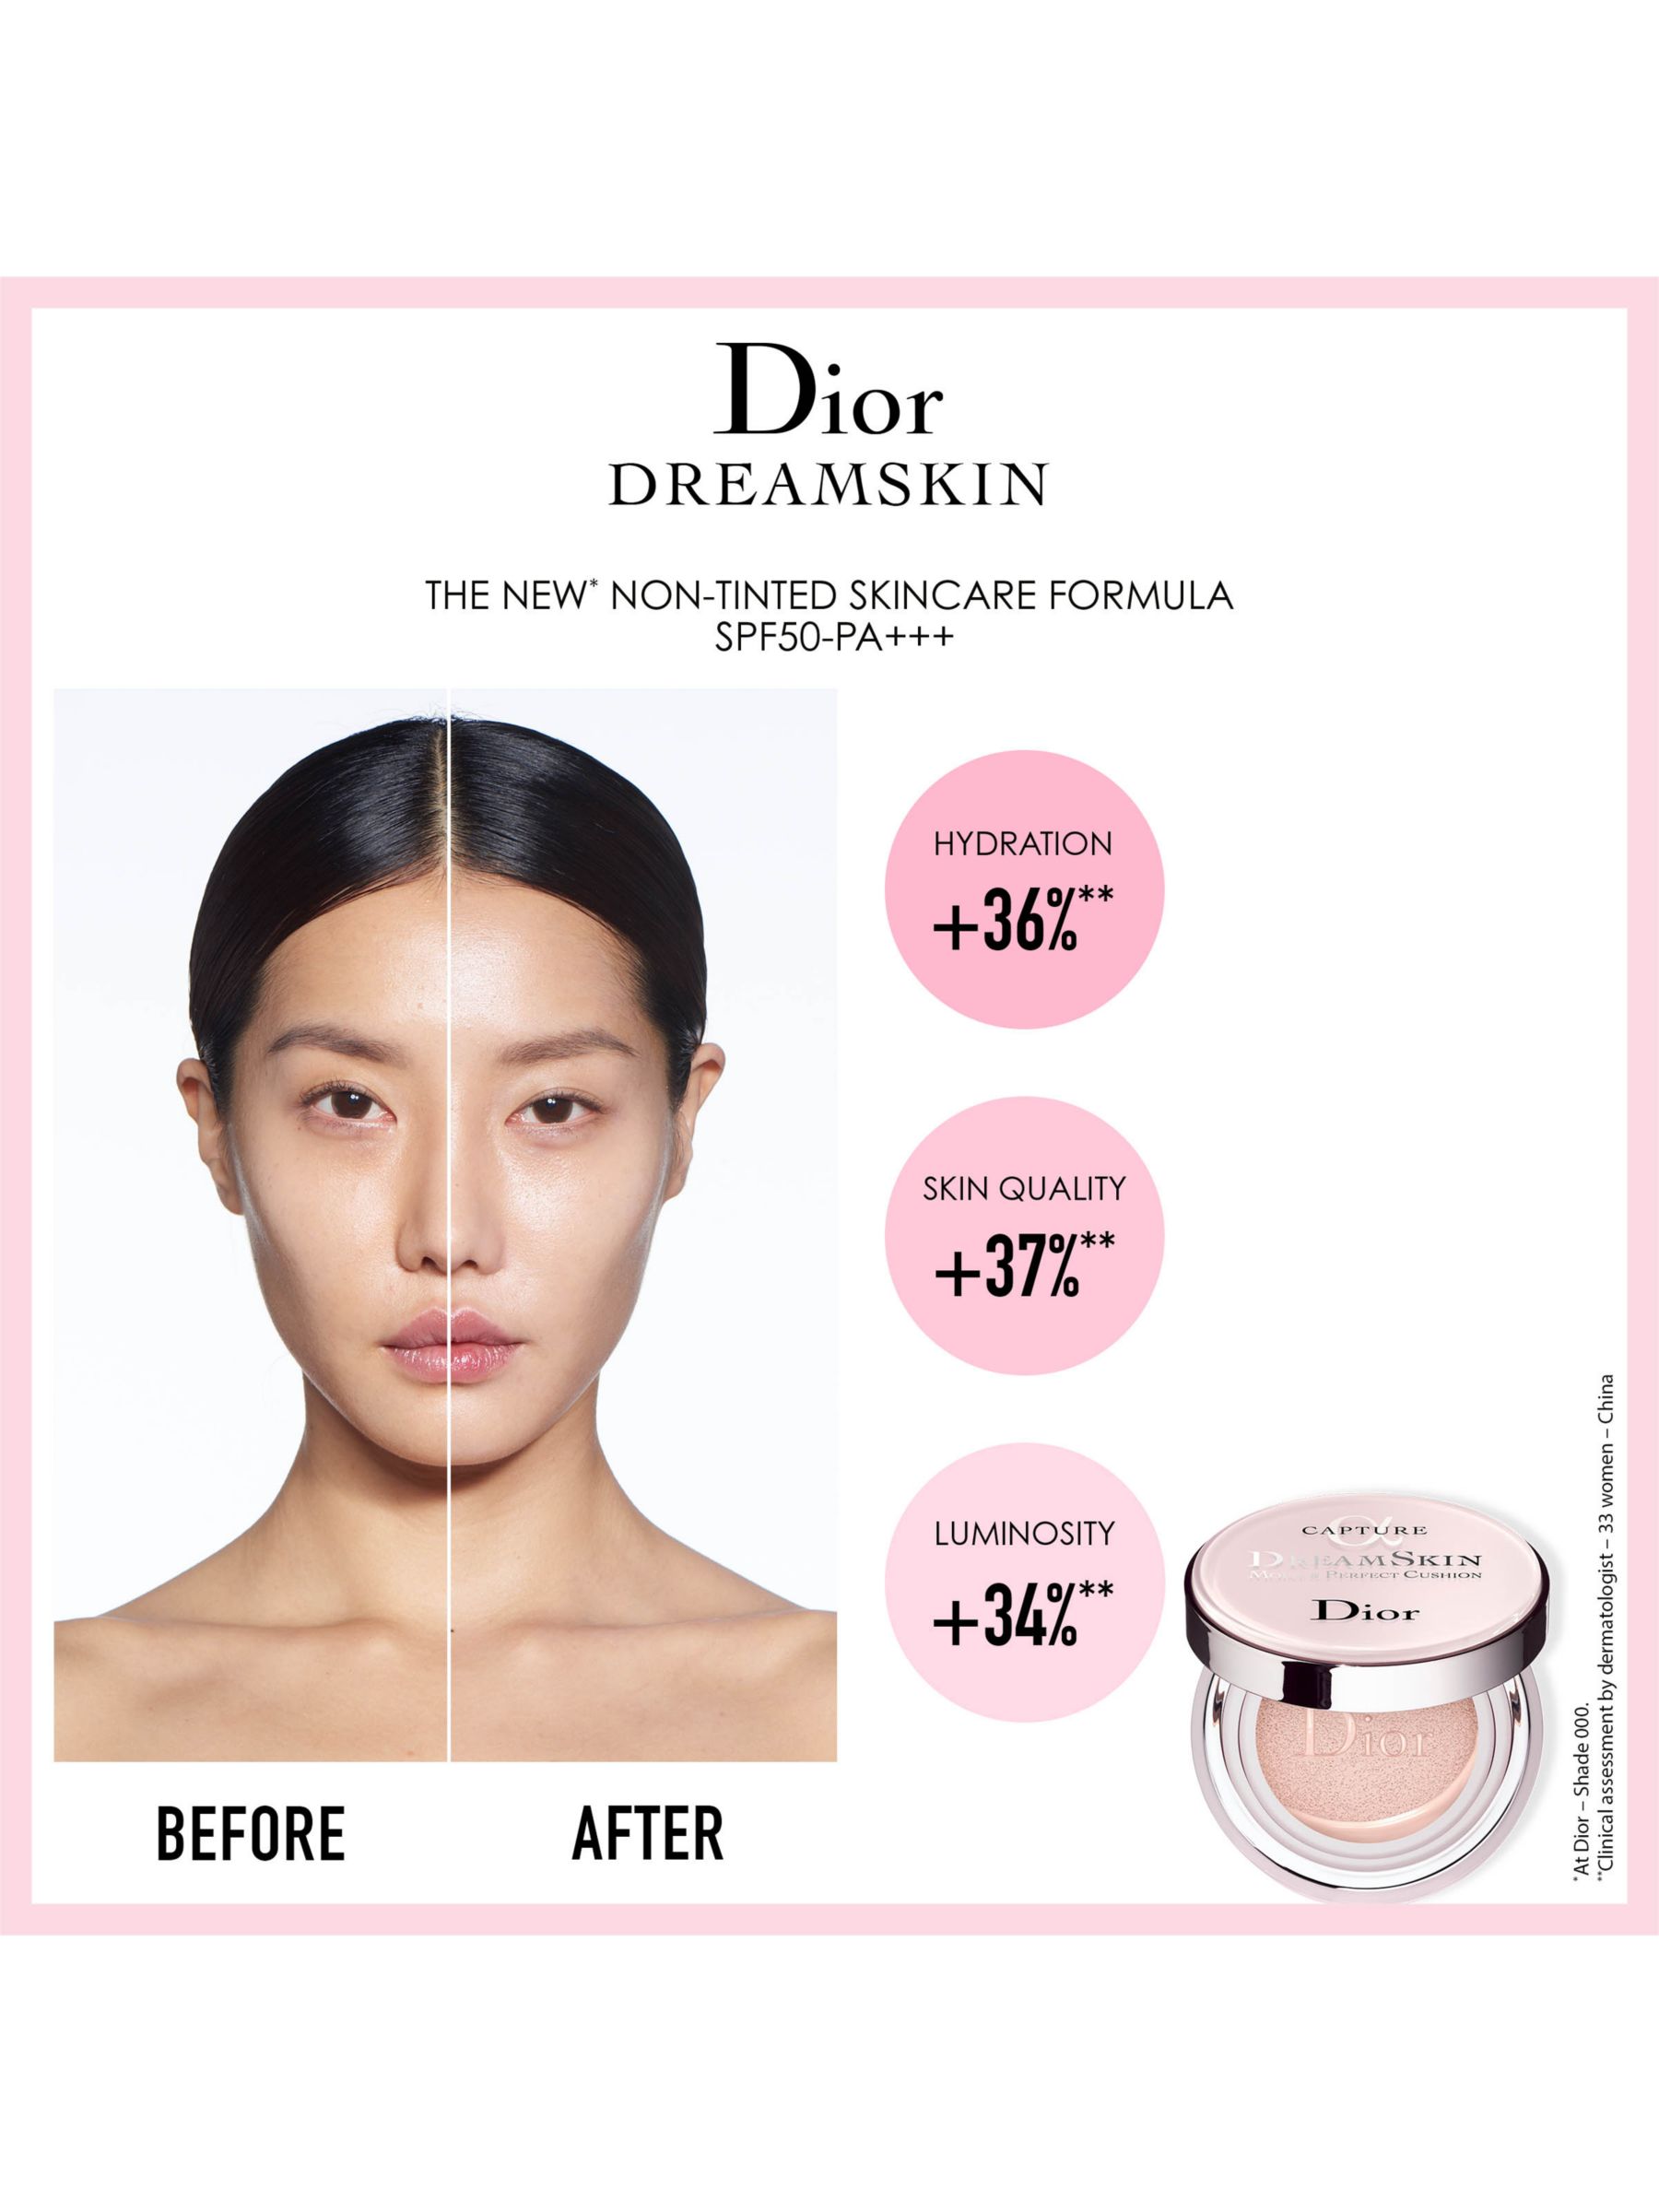 dior dream skin moisturiser